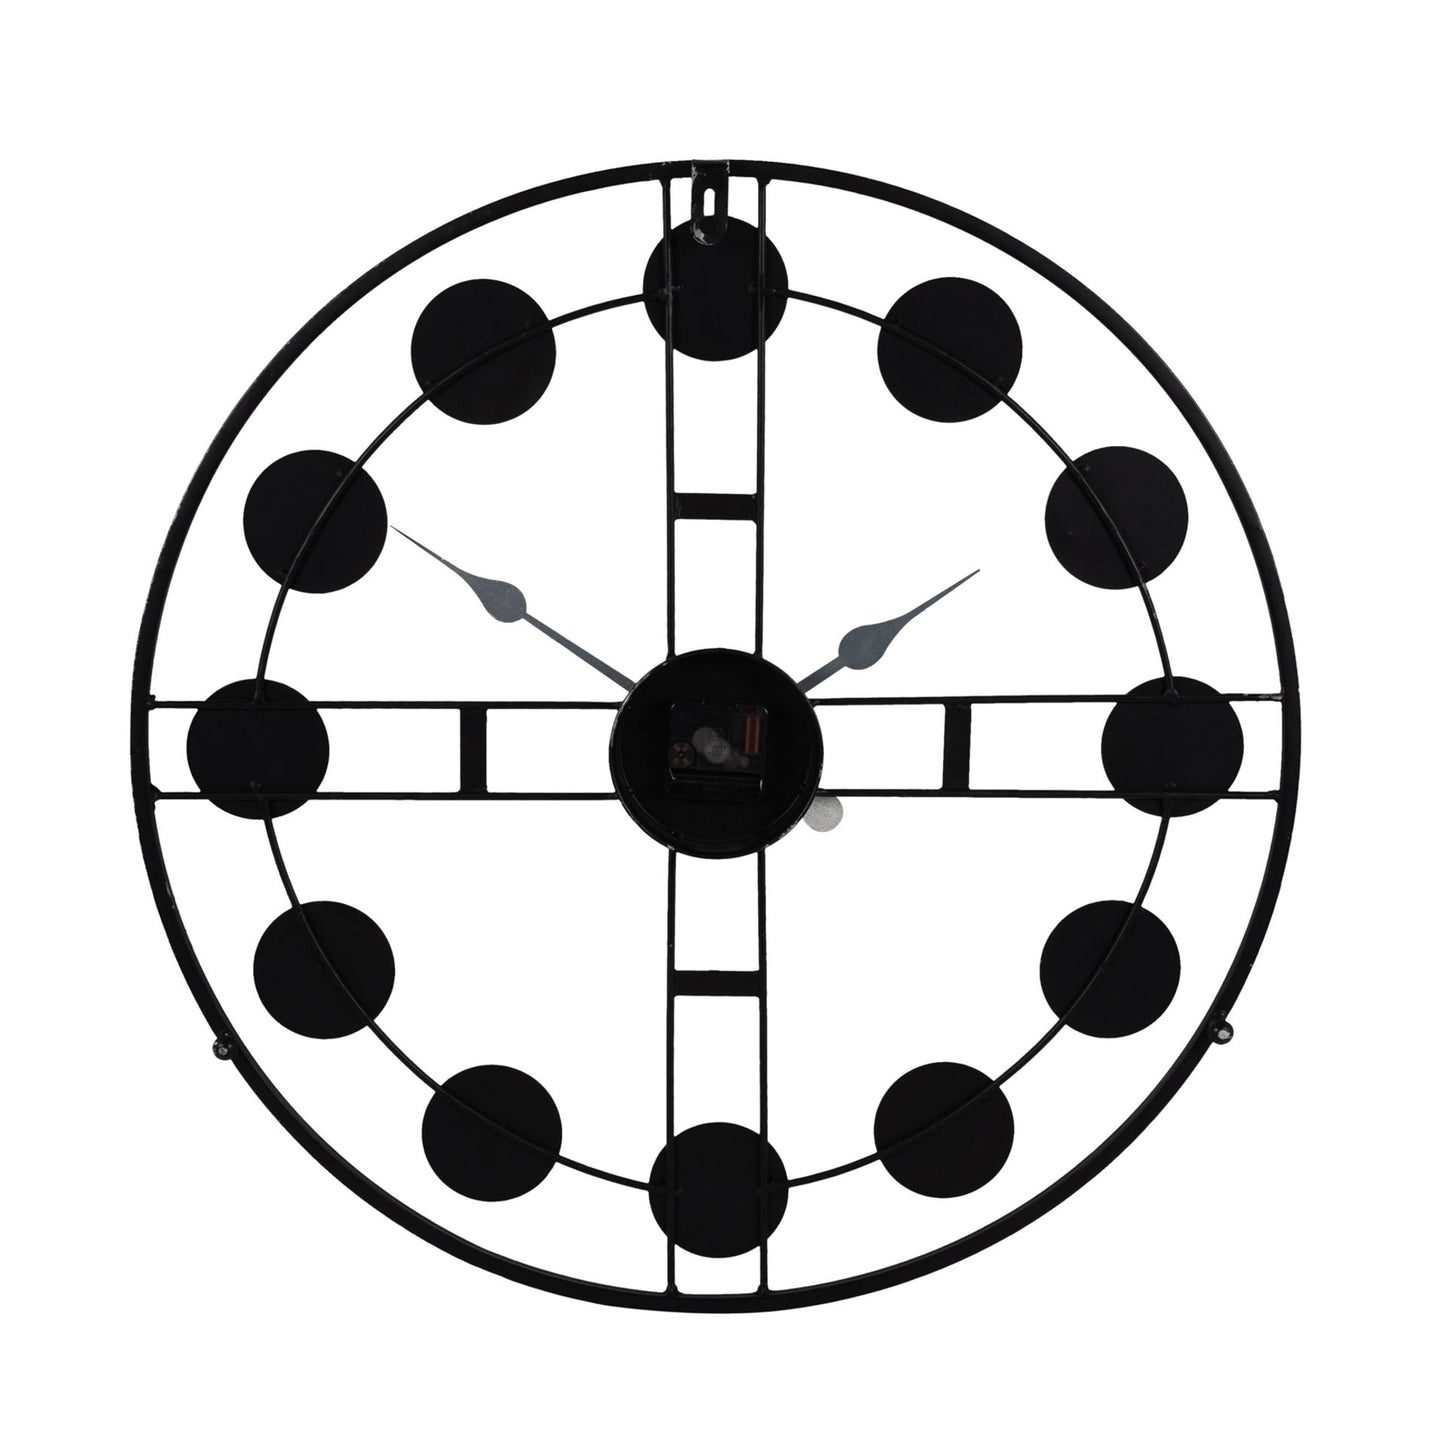 Hometime Black Round Wall Clock Cut Out Design - 65cm